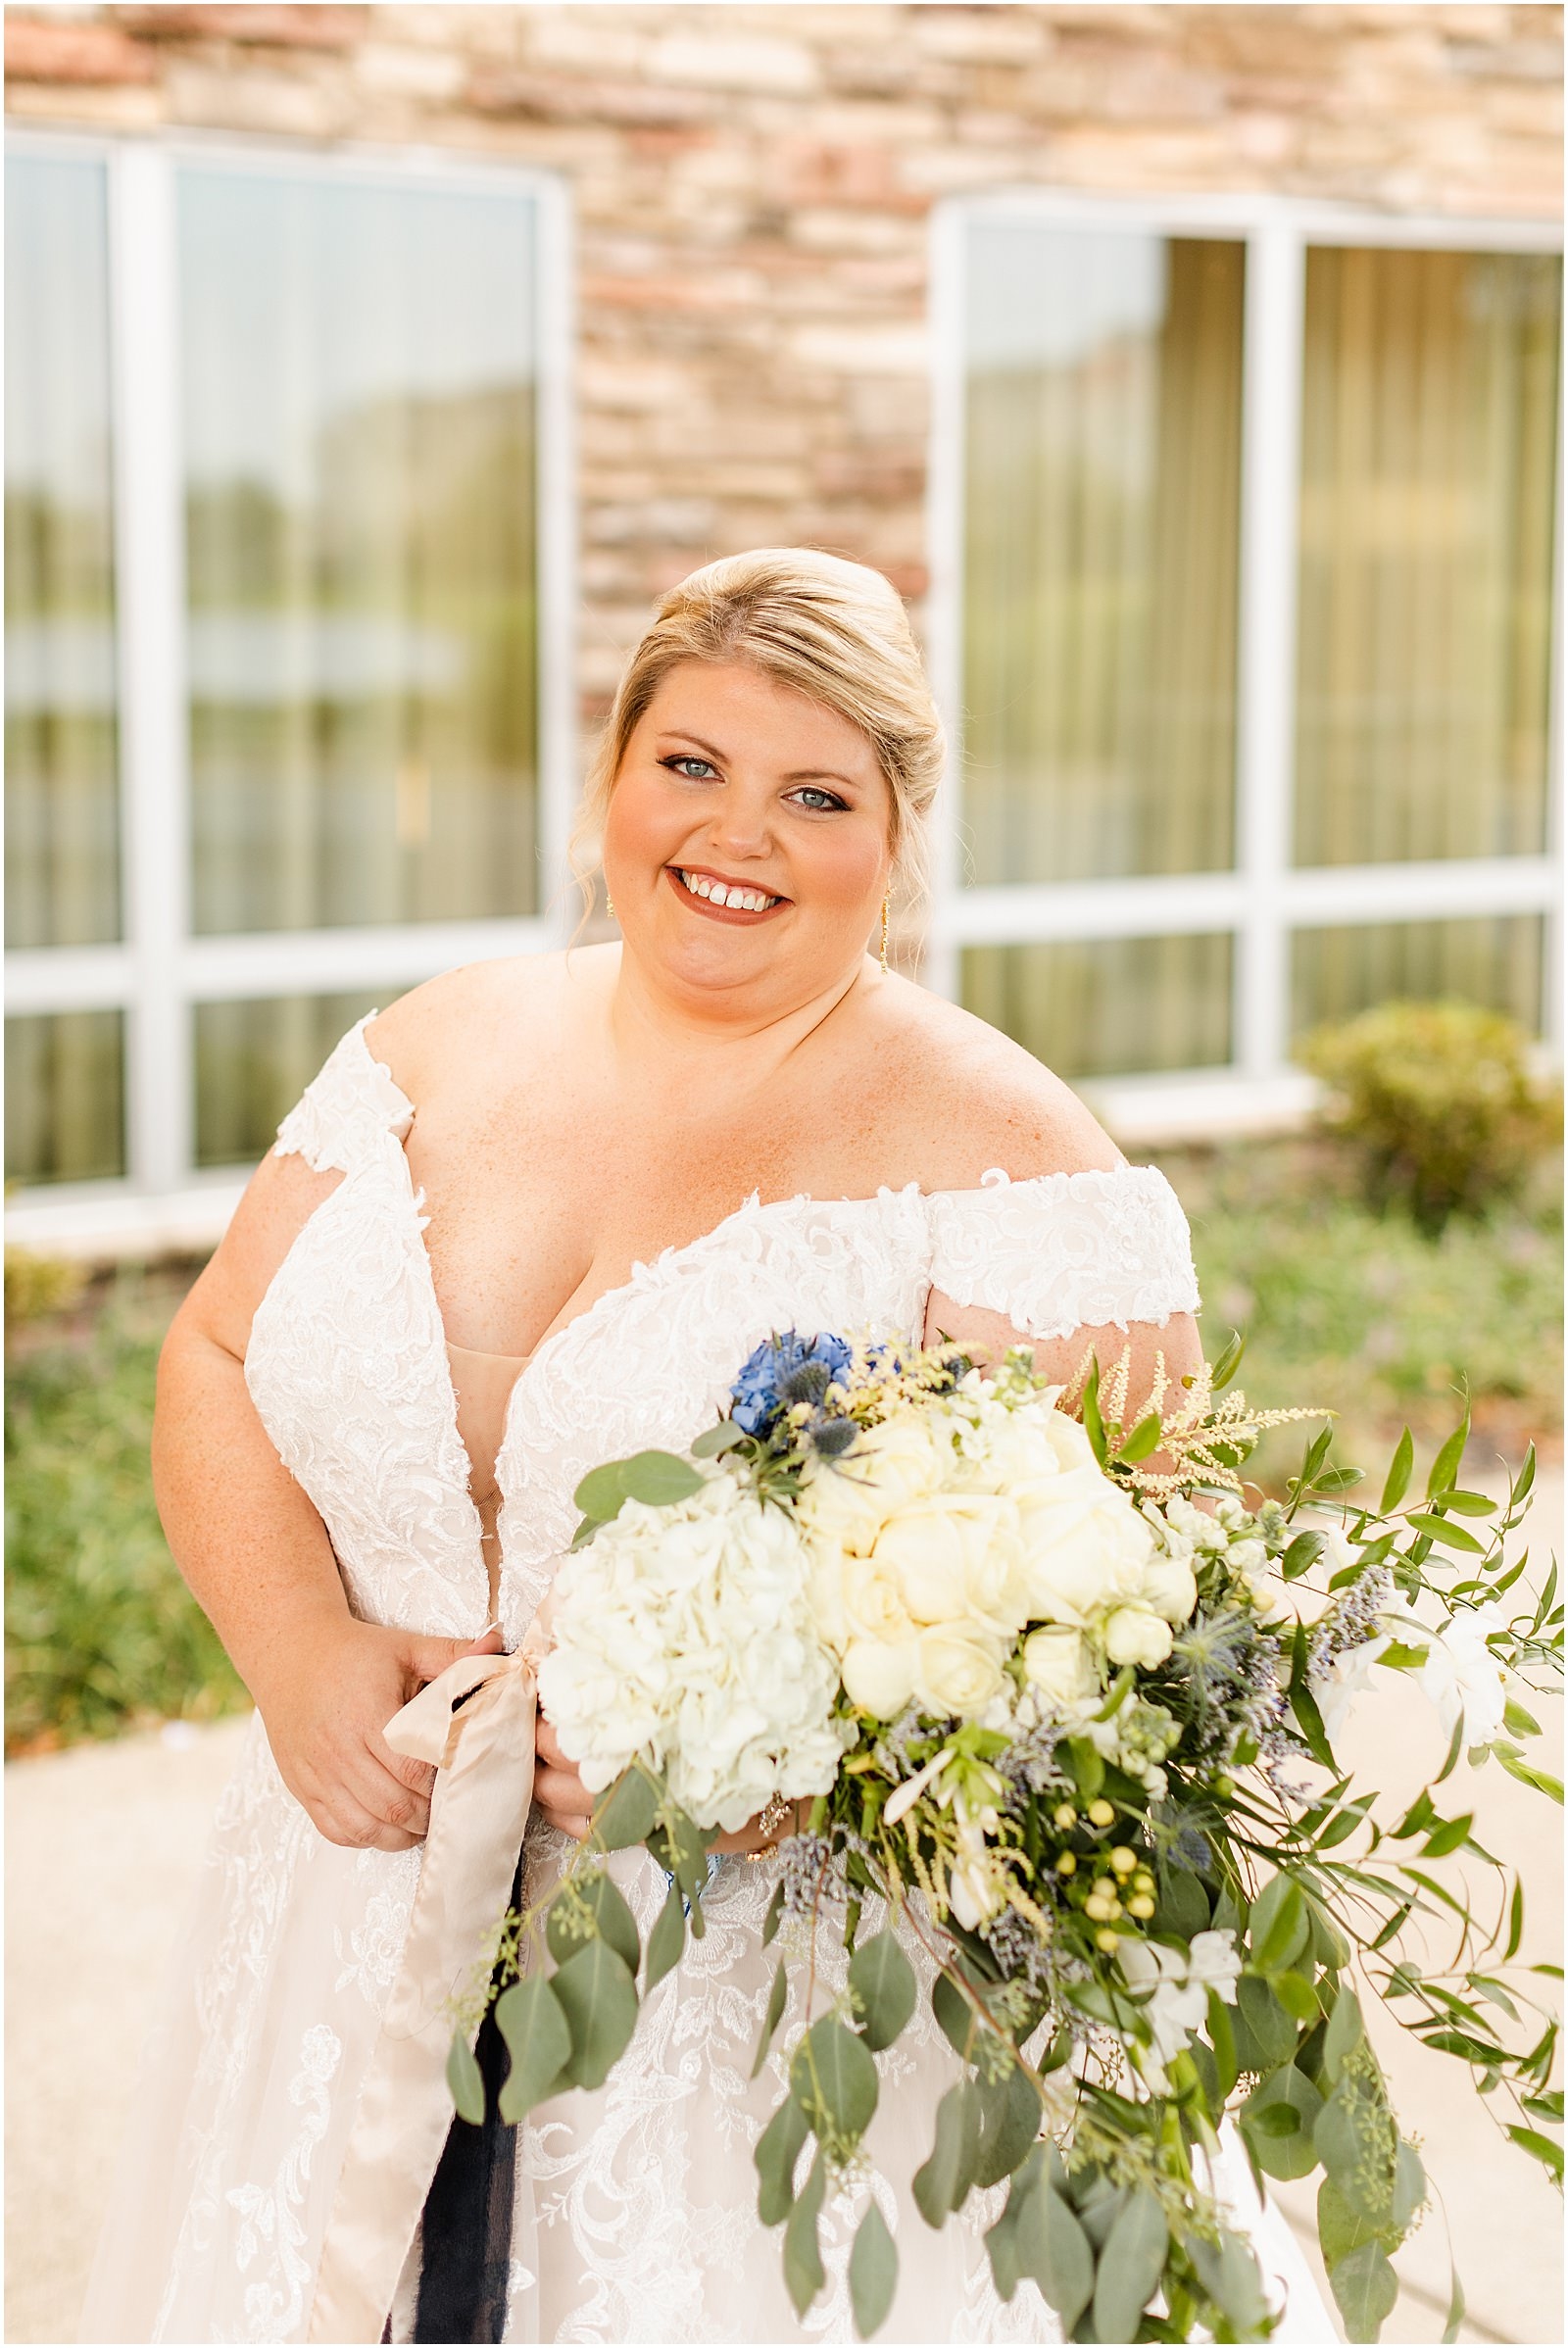 Brittany and Neil's Wedding at Neu Chapel Bret and Brandie | Evansville Photographers | @bretandbrandie-0054.jpg